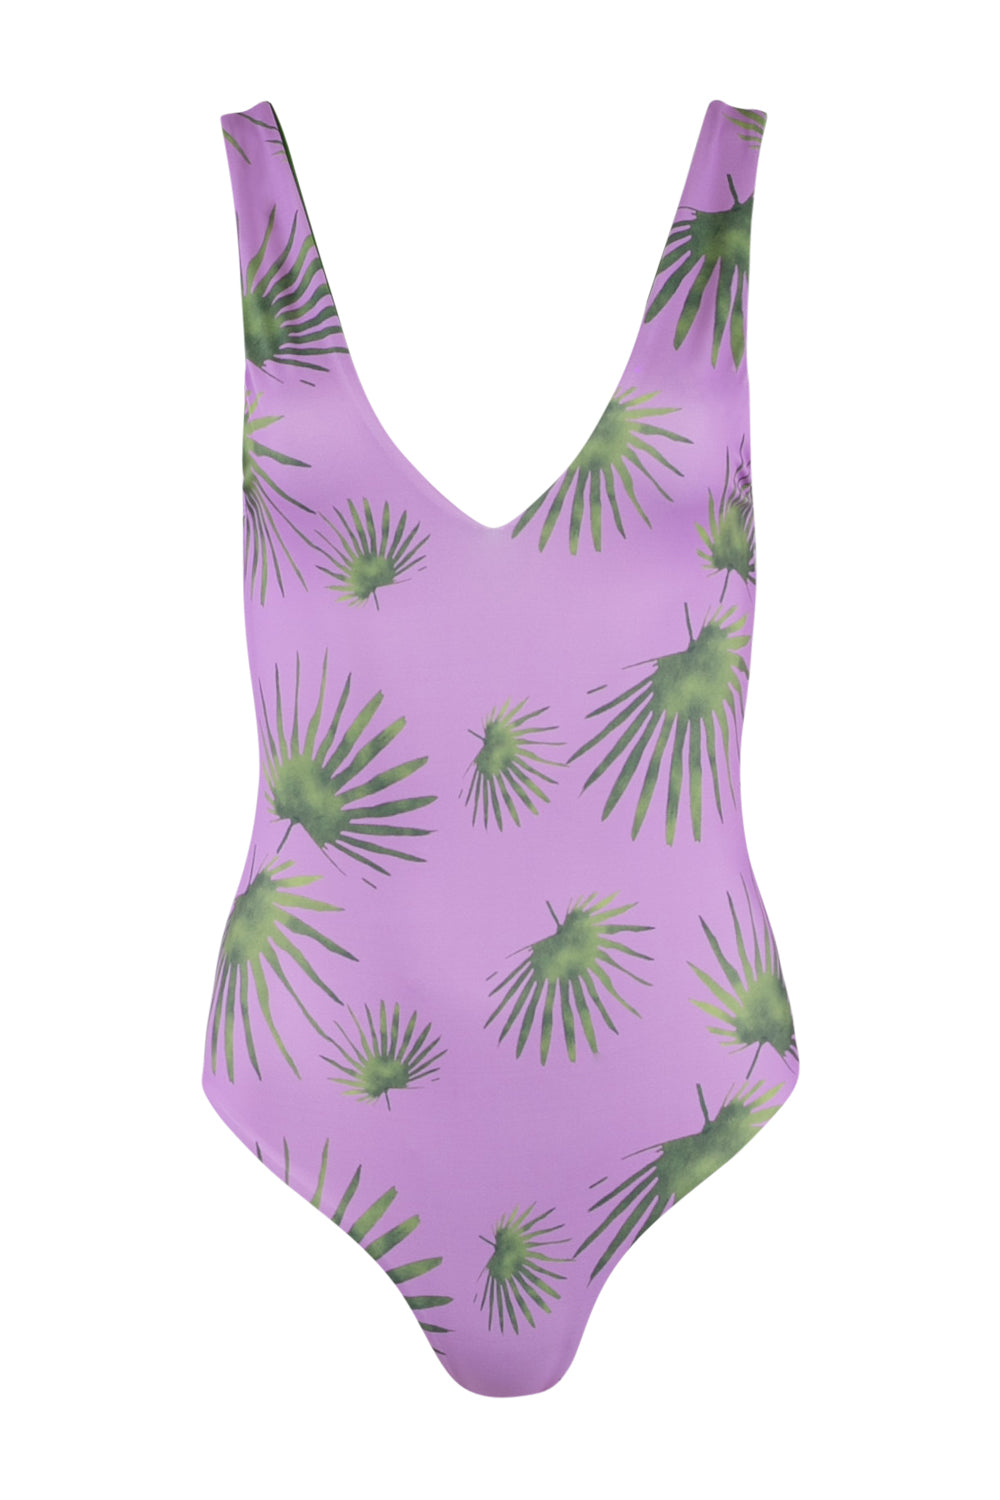 Savana Palm V Neck Reversible Swimsuit - Tucca Swim